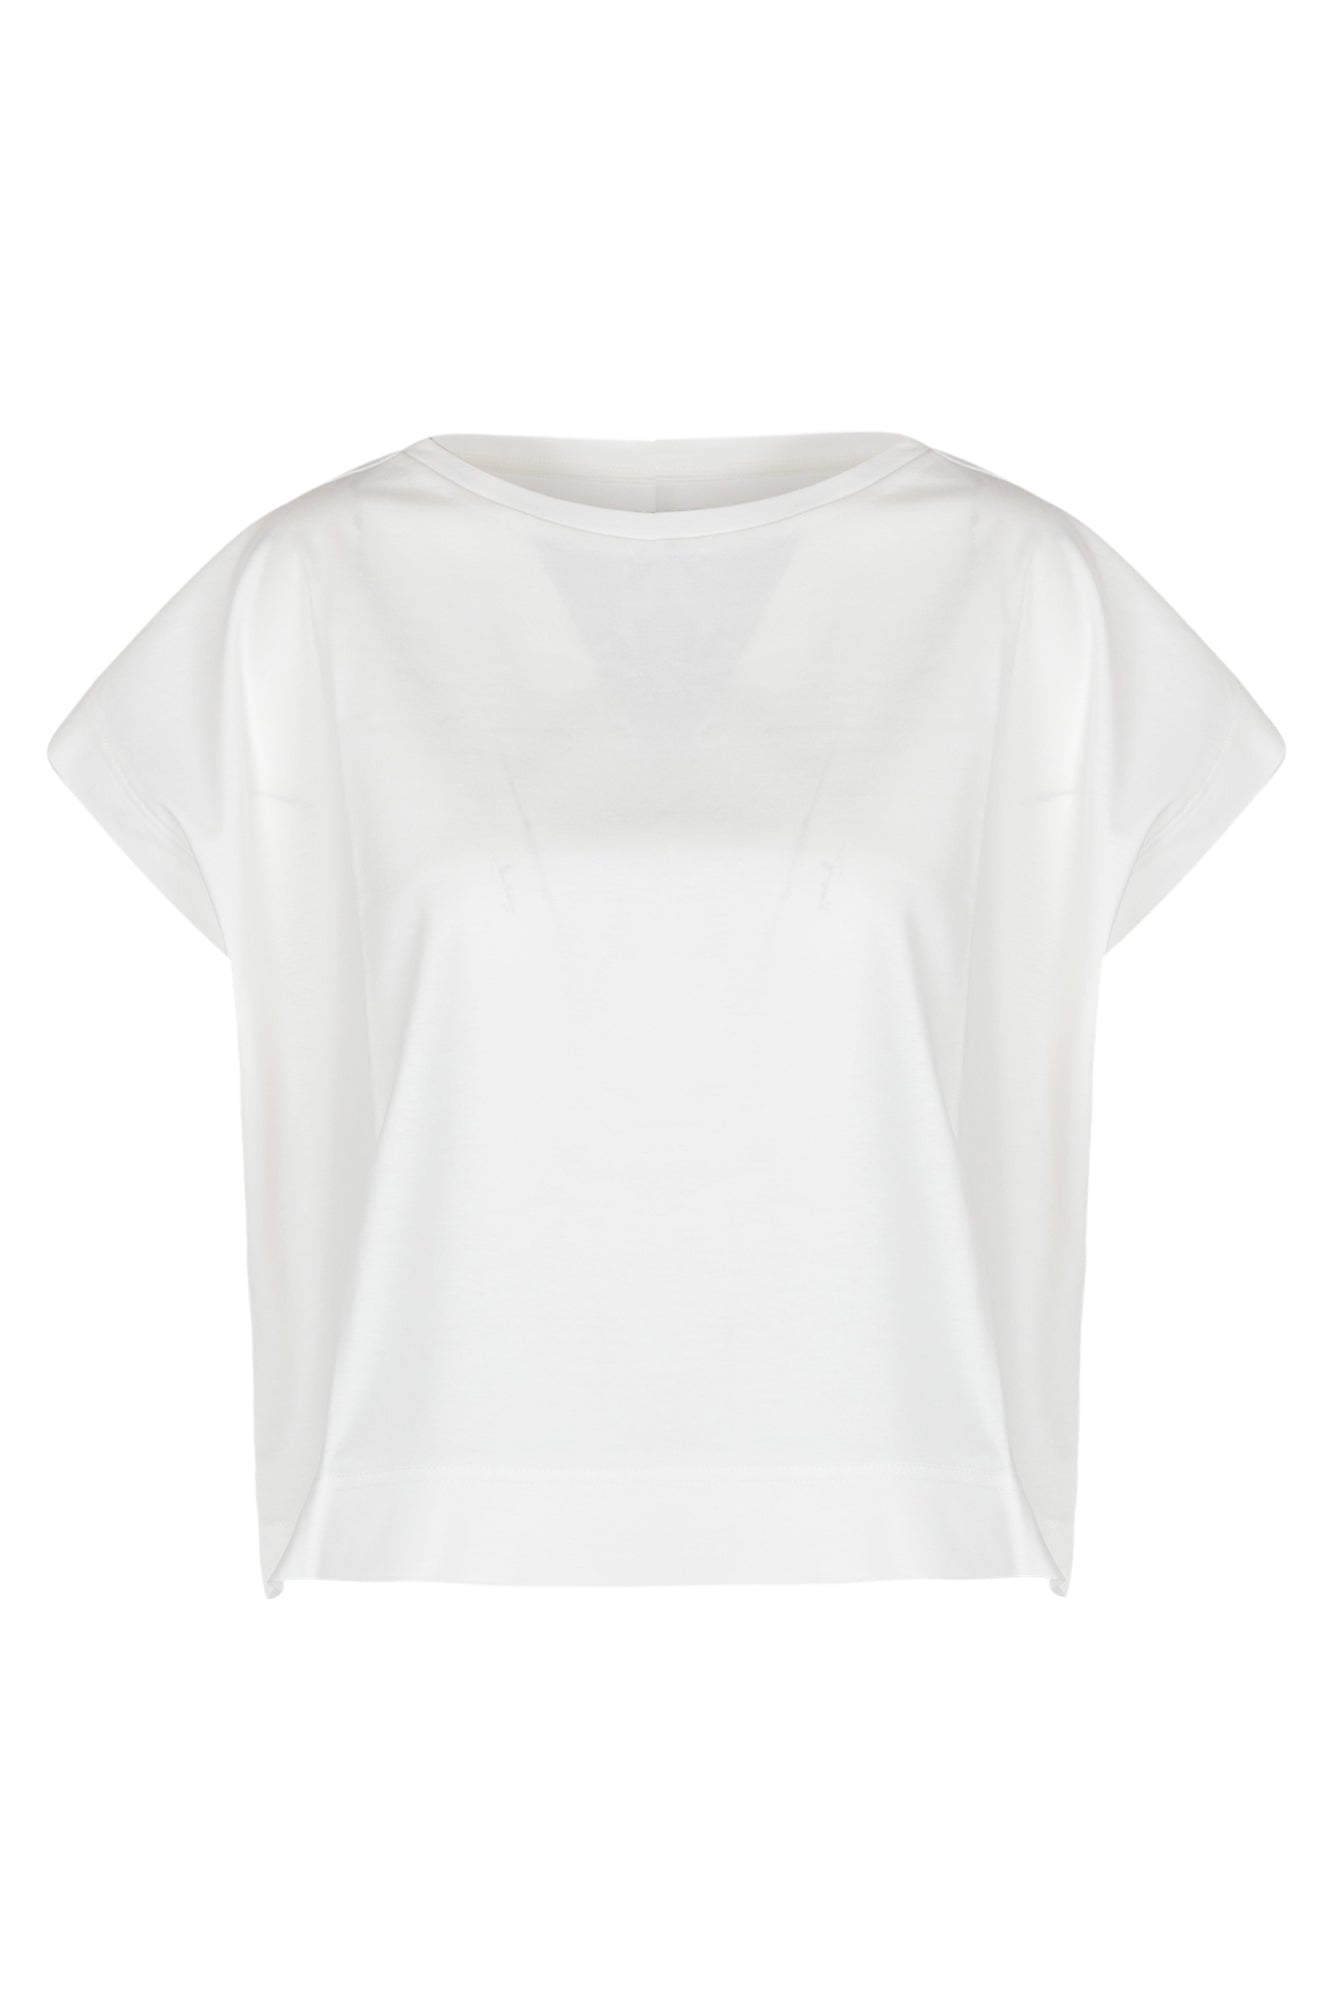 People Of Shibuya - T-shirt - 430456 - Bianco